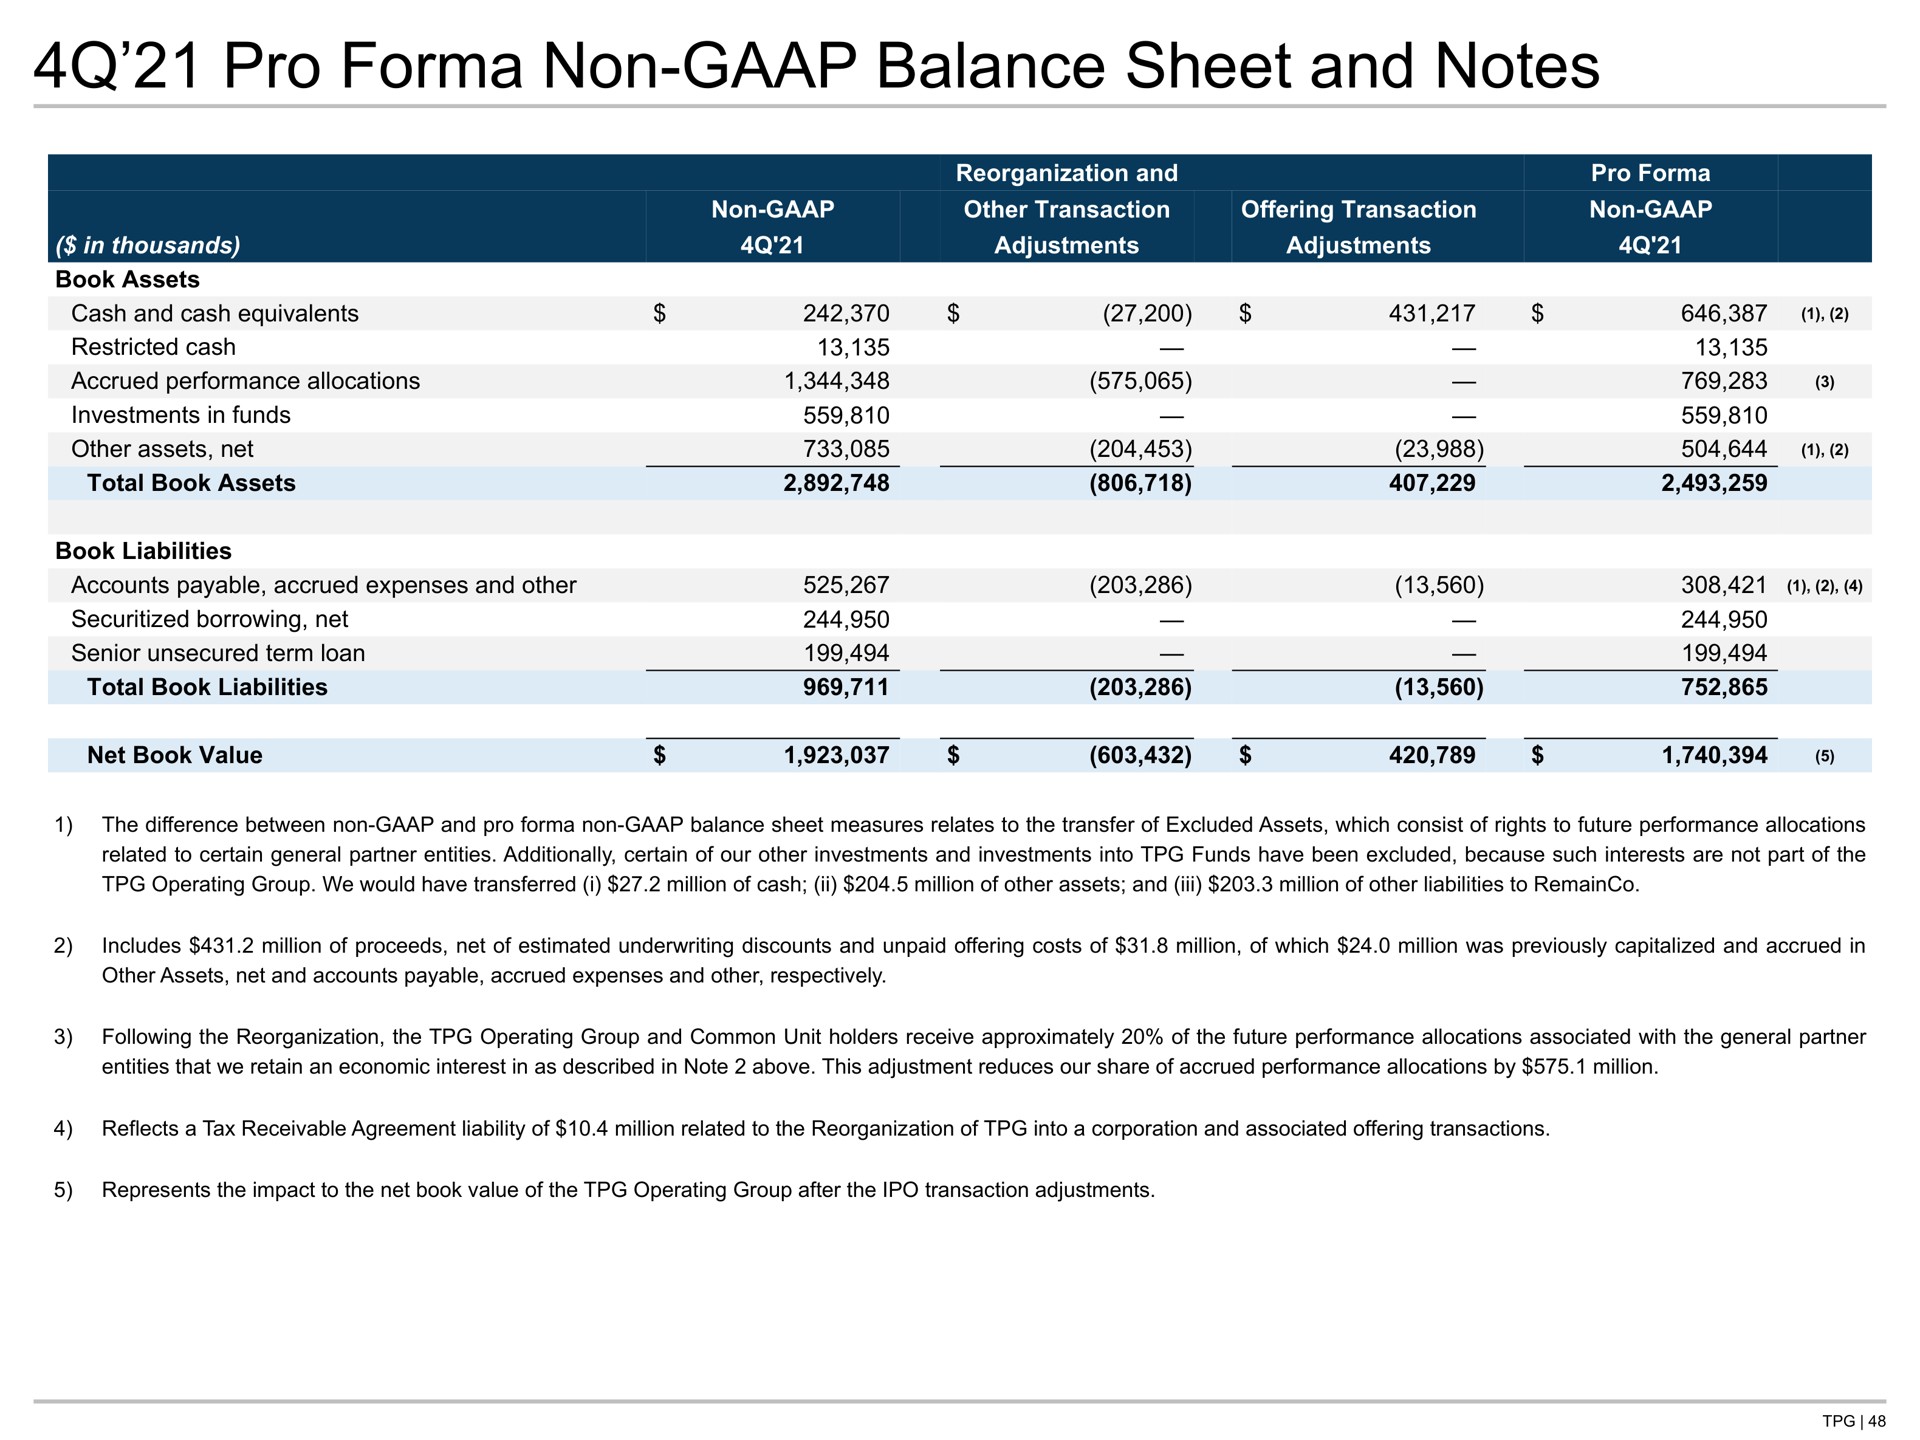 pro non balance sheet and notes | TPG